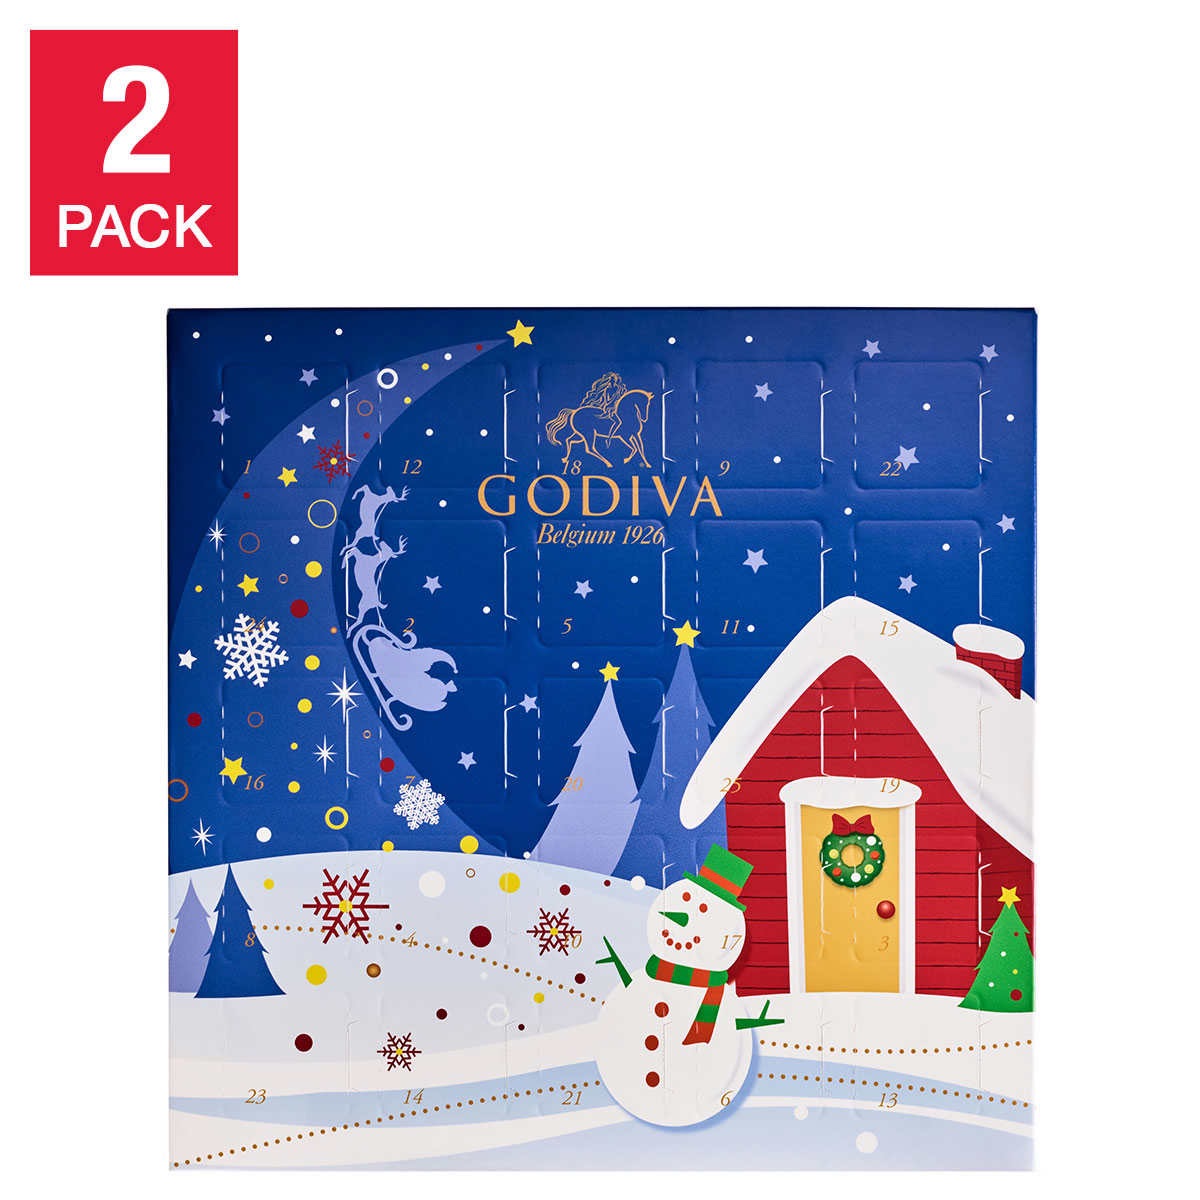 Godiva Holiday Premium Chocolate Advent Calendar, 2-pack圣诞倒数巧克力